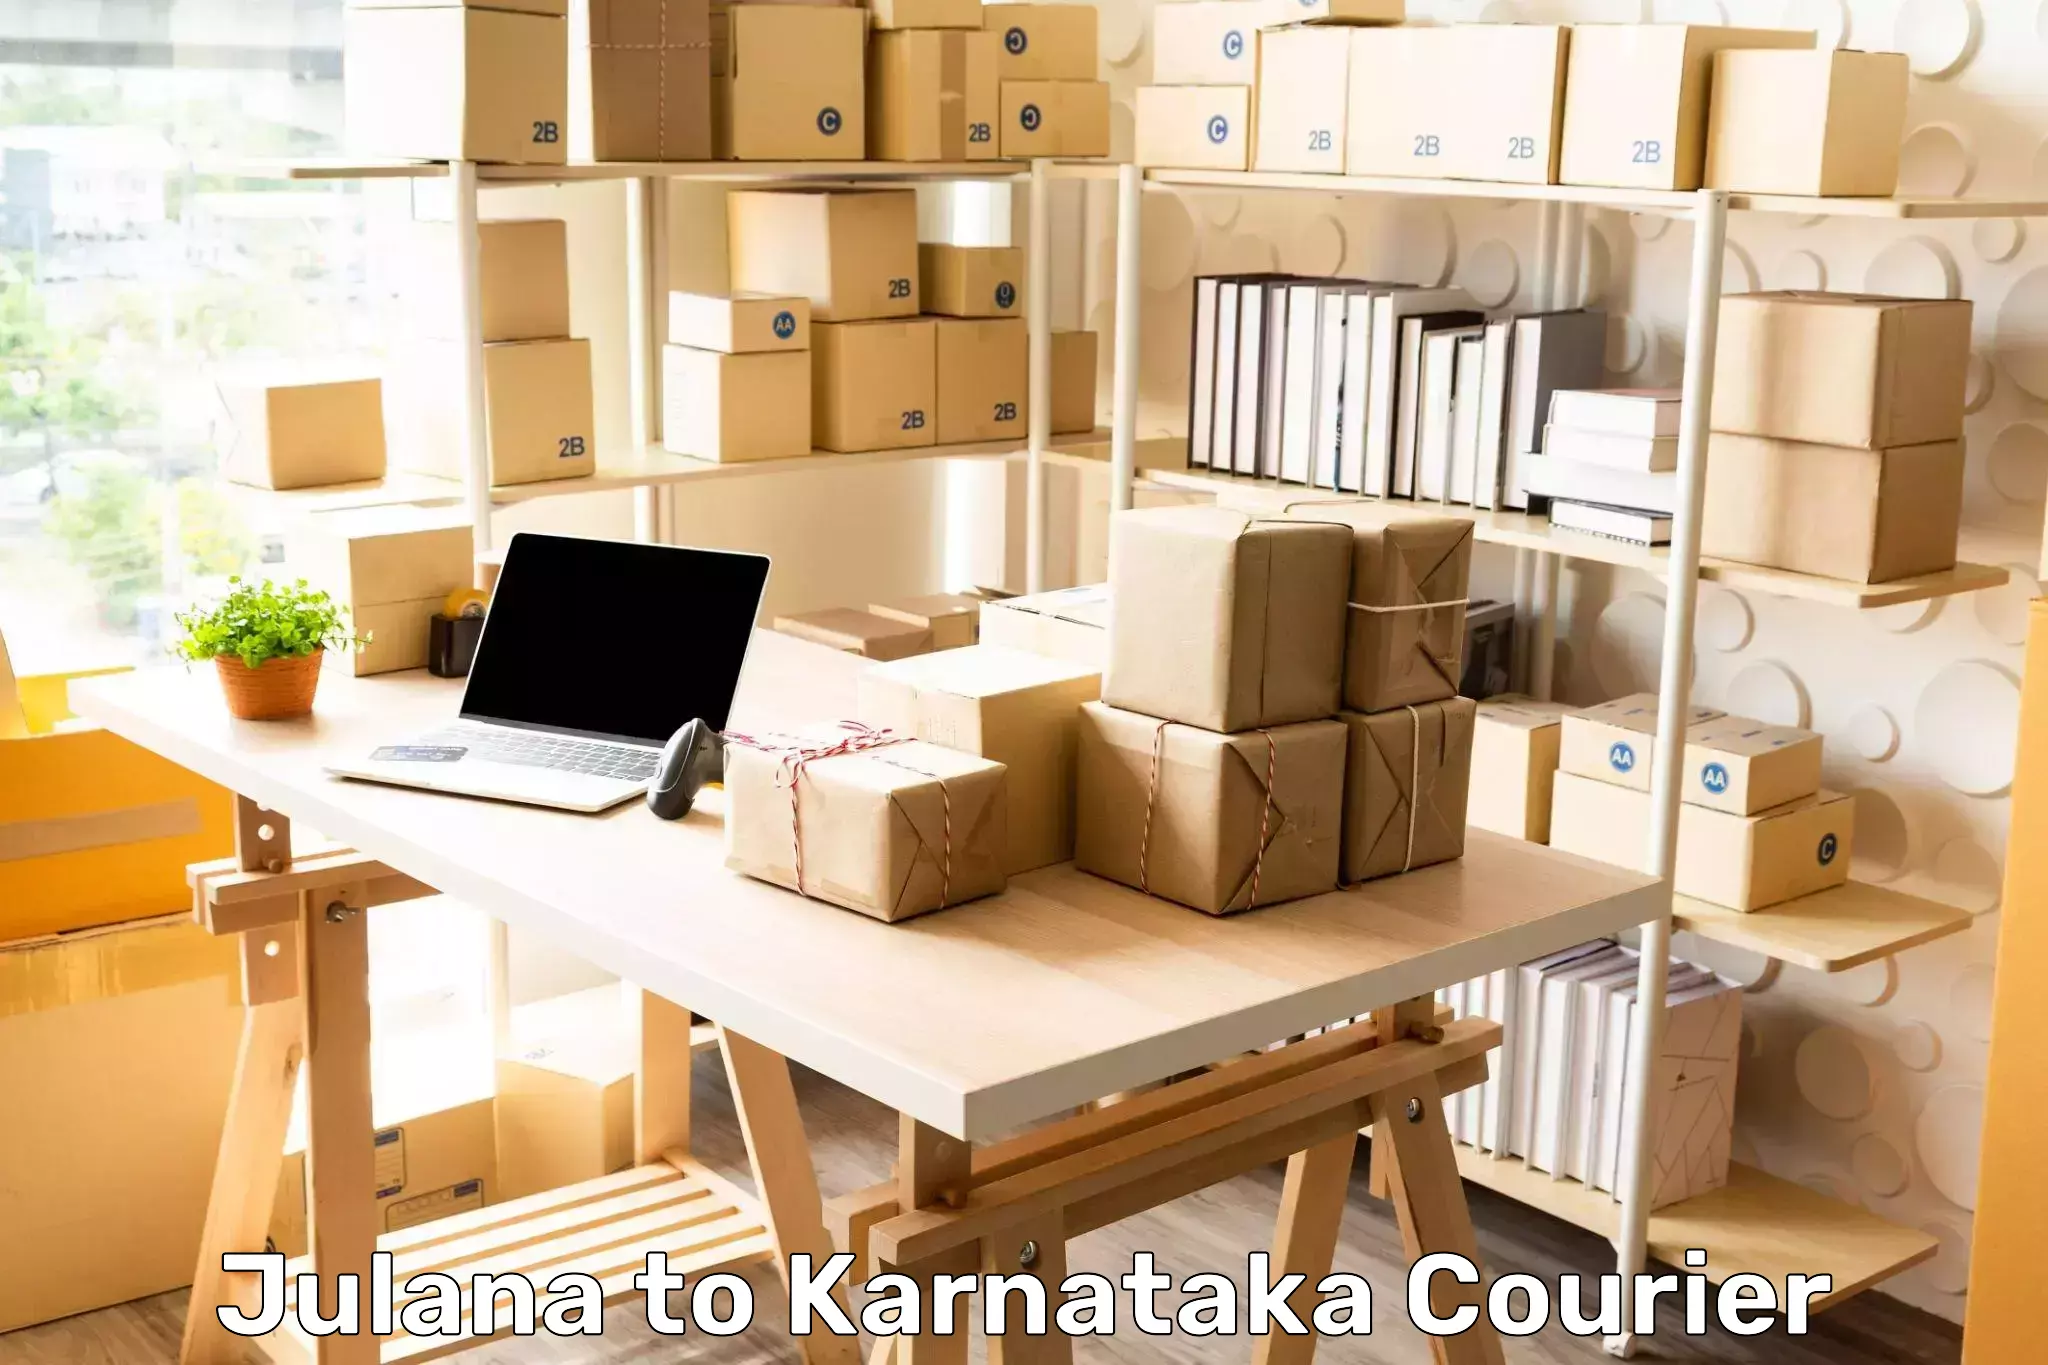 End-to-end delivery Julana to Karnataka